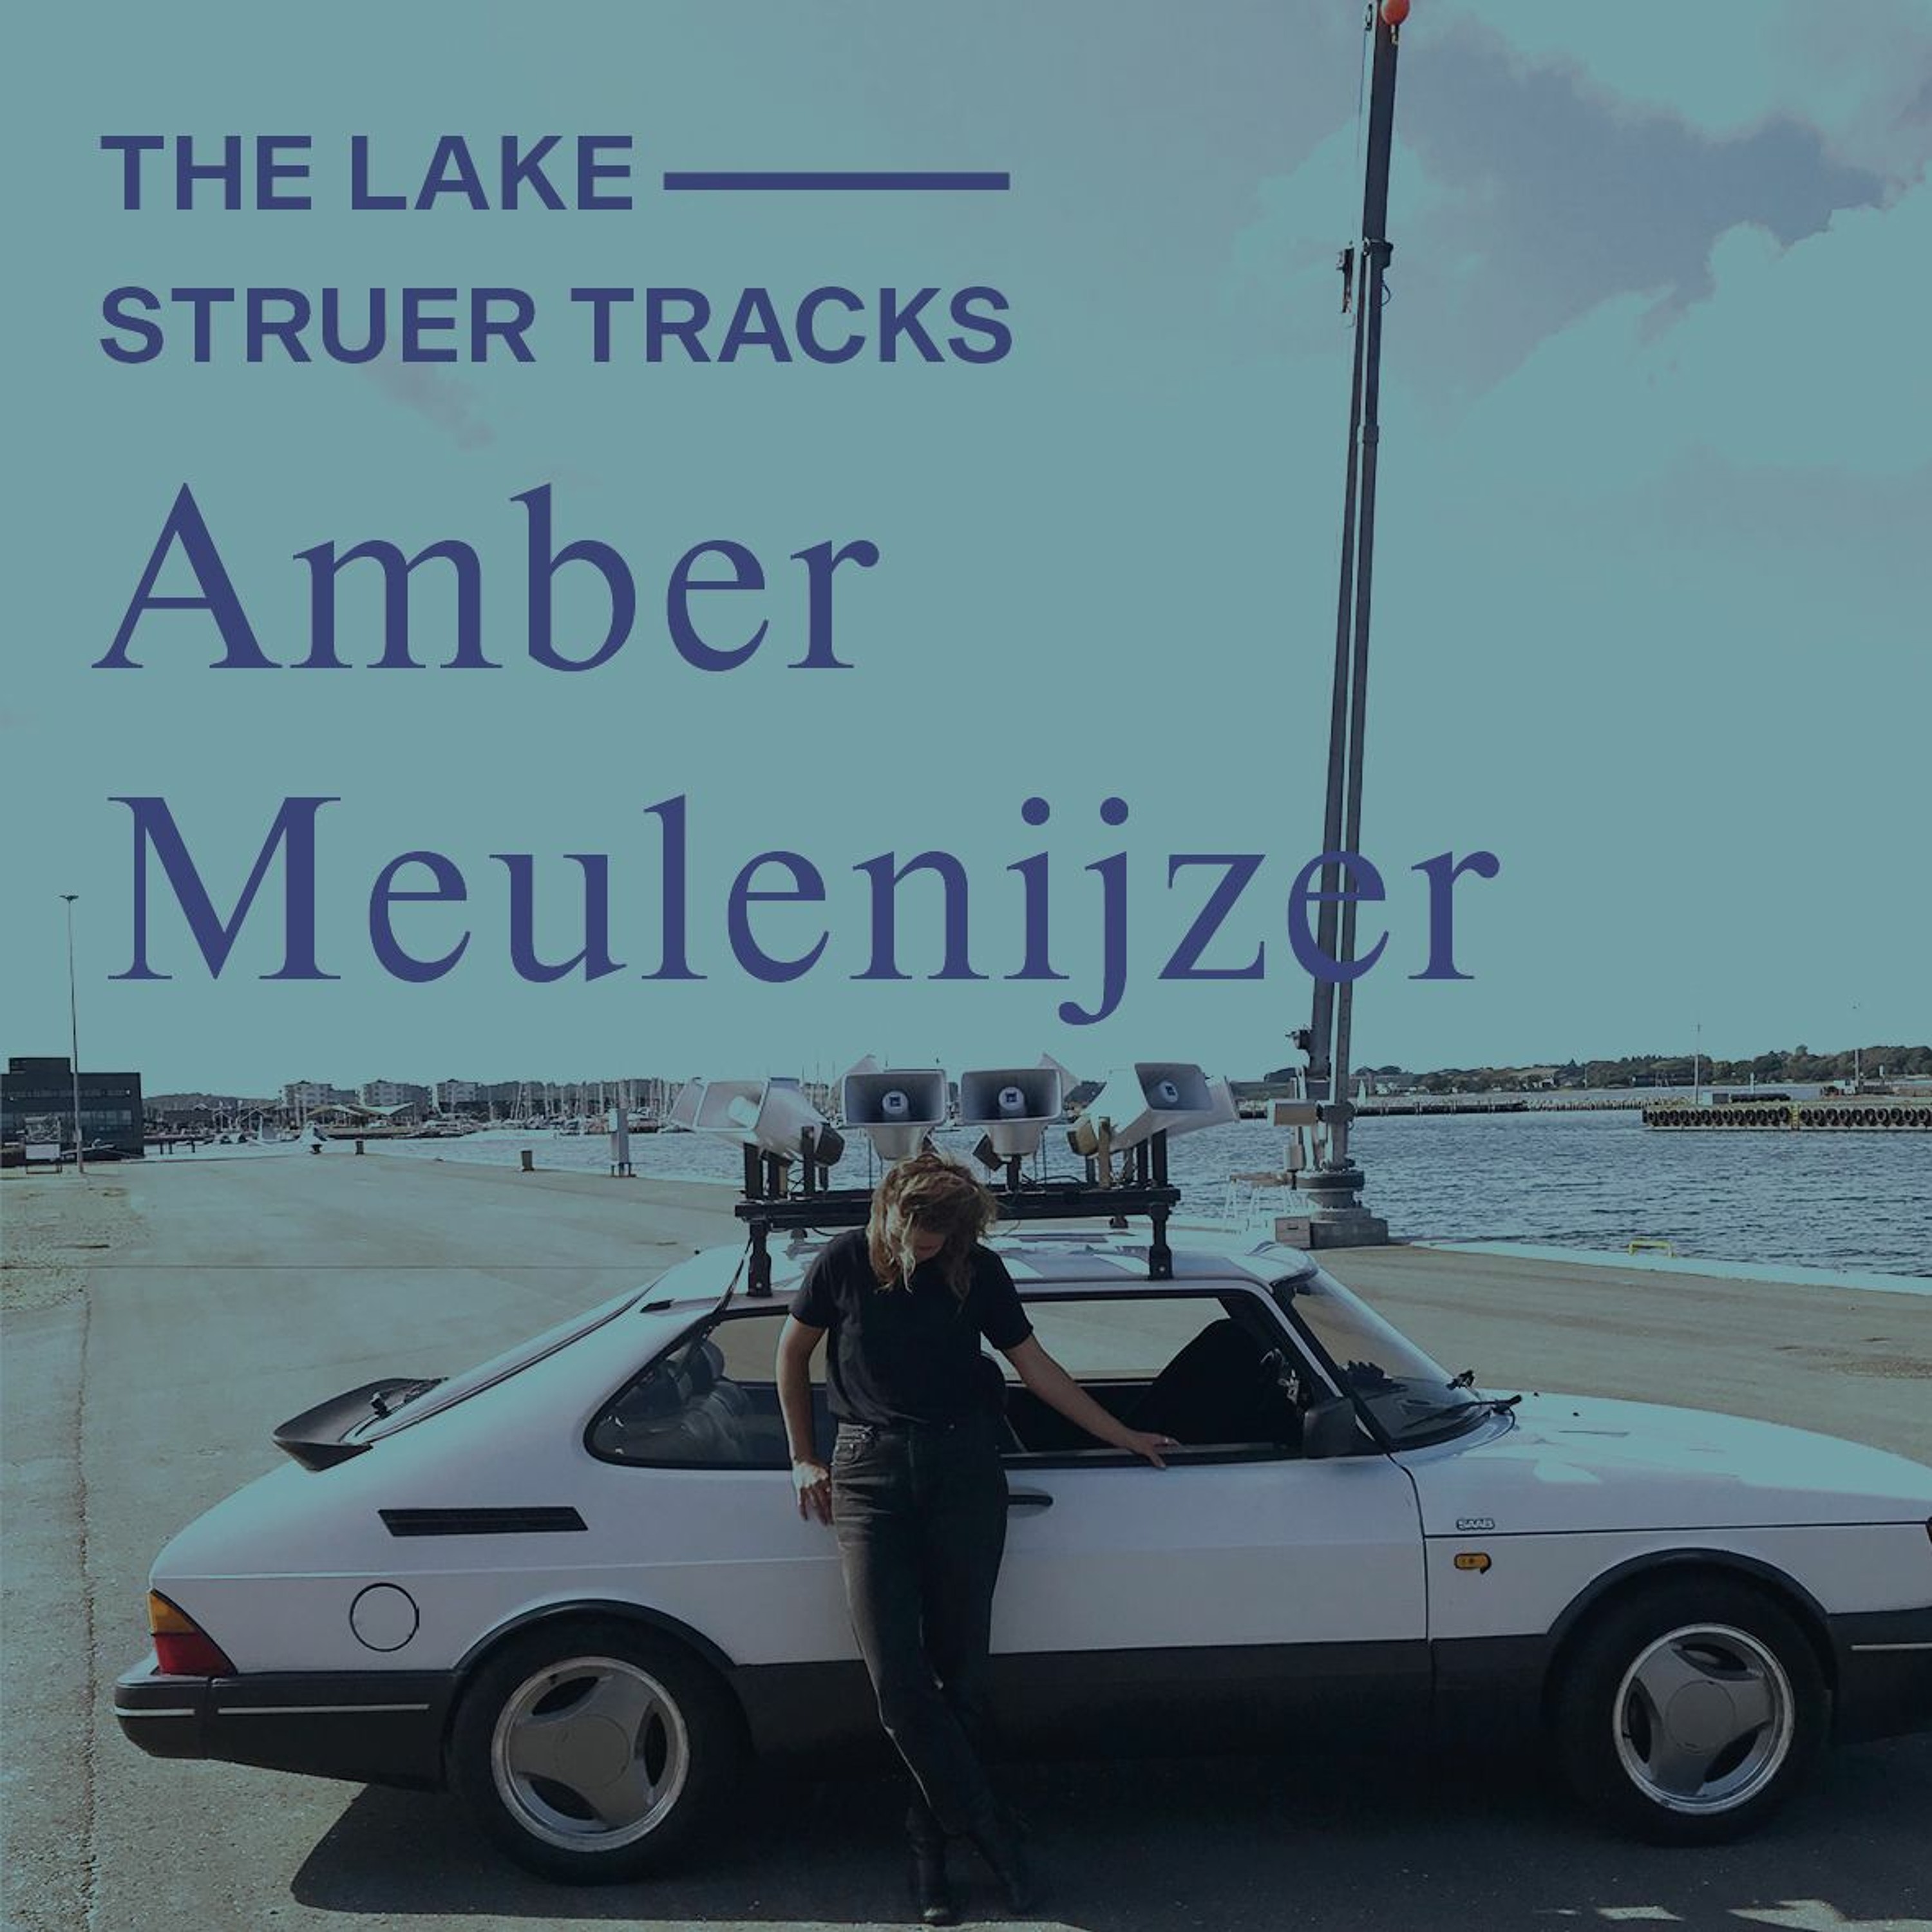 The Lake ⏤ Struer Tracks: Driving in Amber Meulenijzer's Saab sculpture